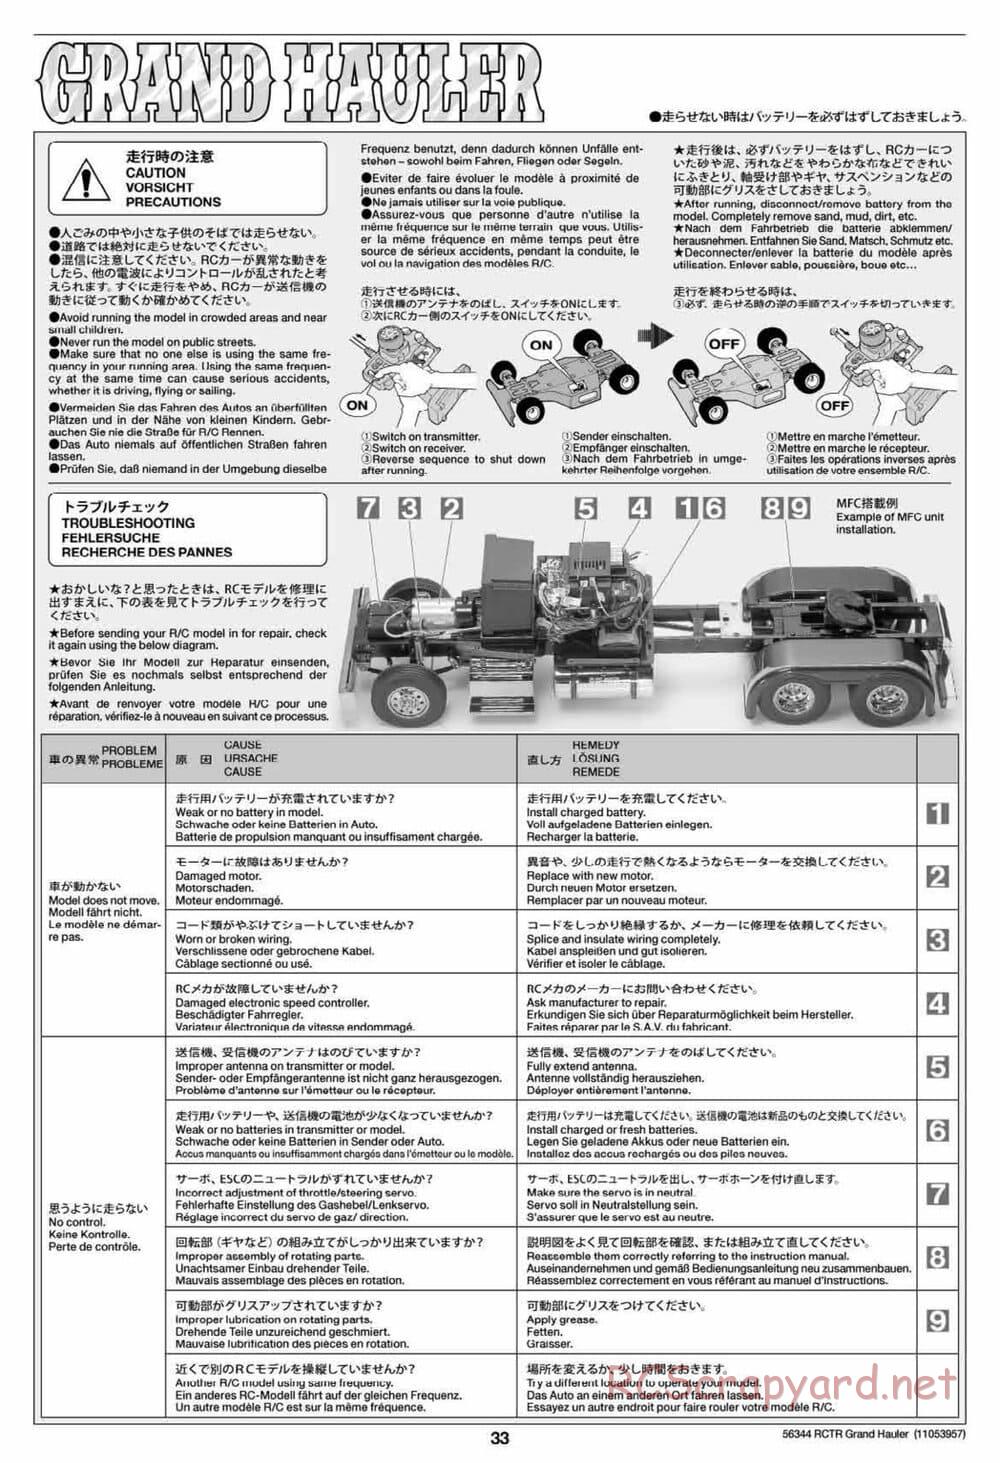 Tamiya - Grand Hauler Tractor Truck Chassis - Manual - Page 33